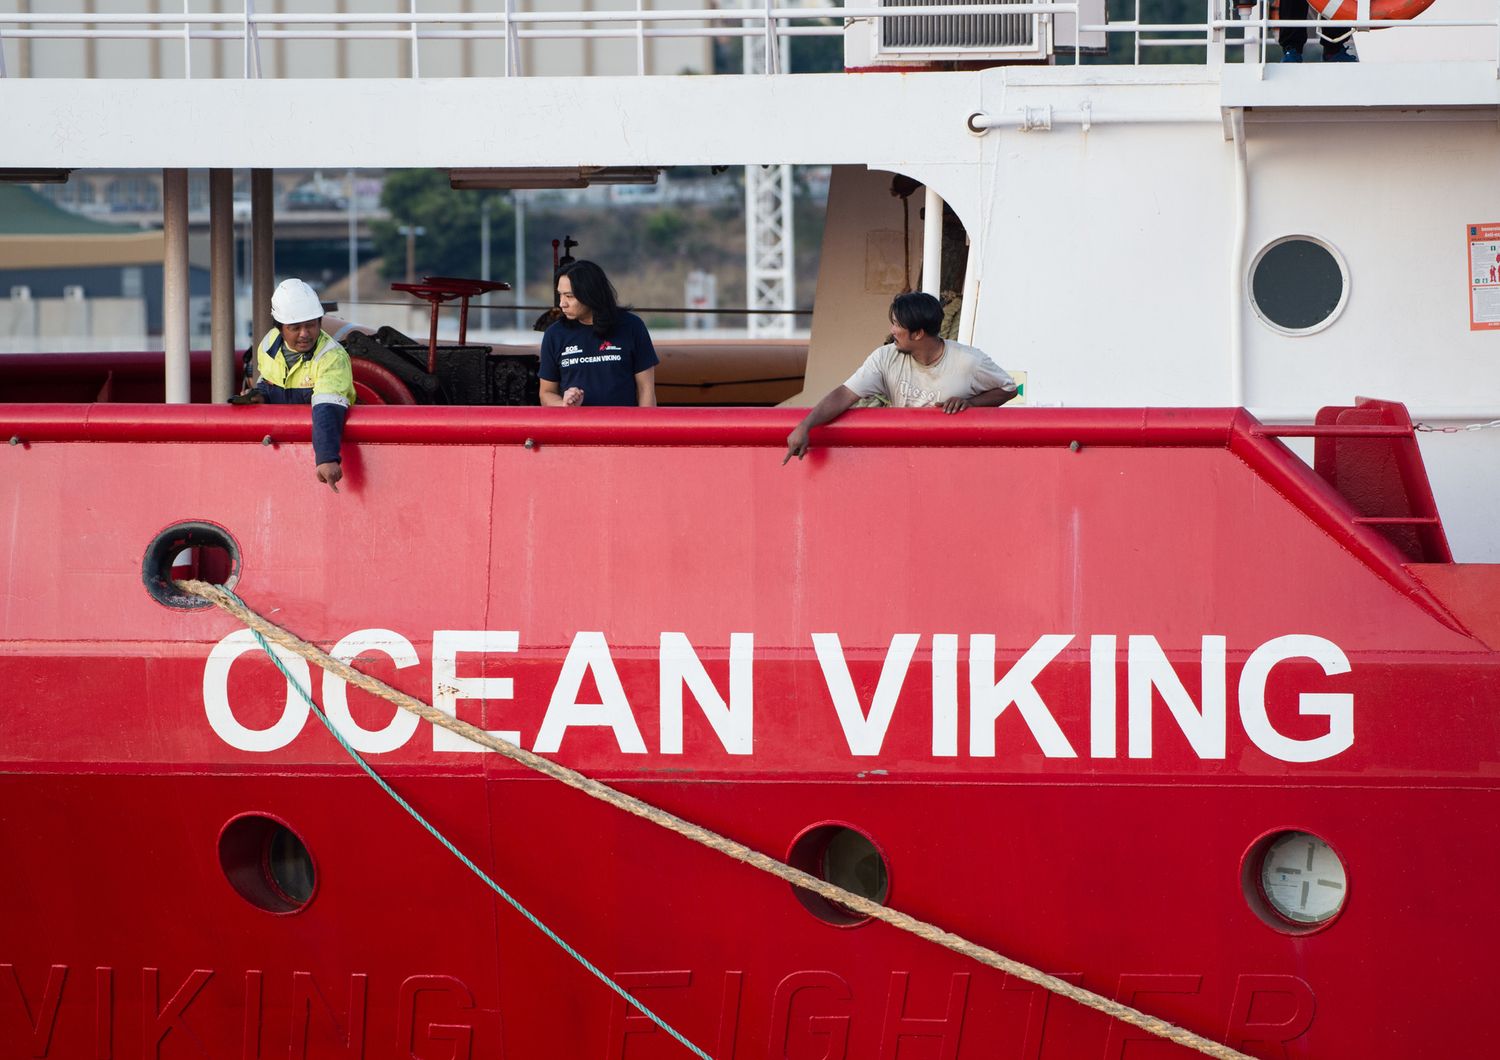 Migranti sulla Ocean Viking